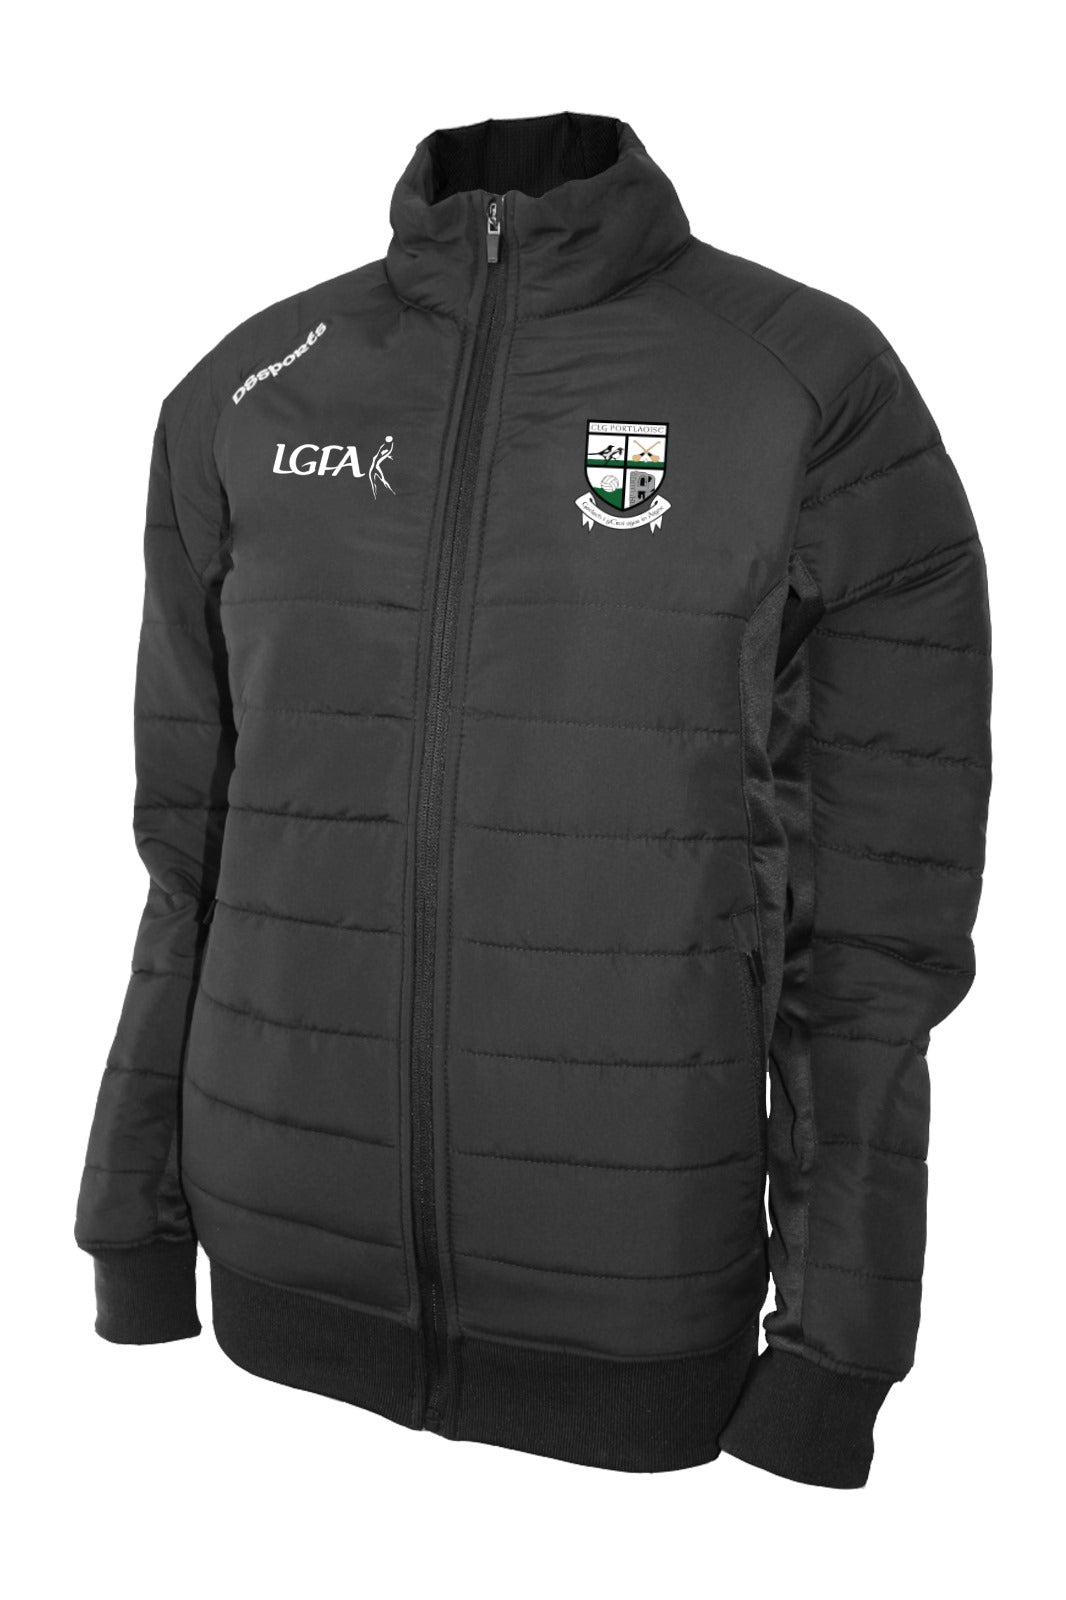 Portlaoise LGFA - Black Puffer Jacket